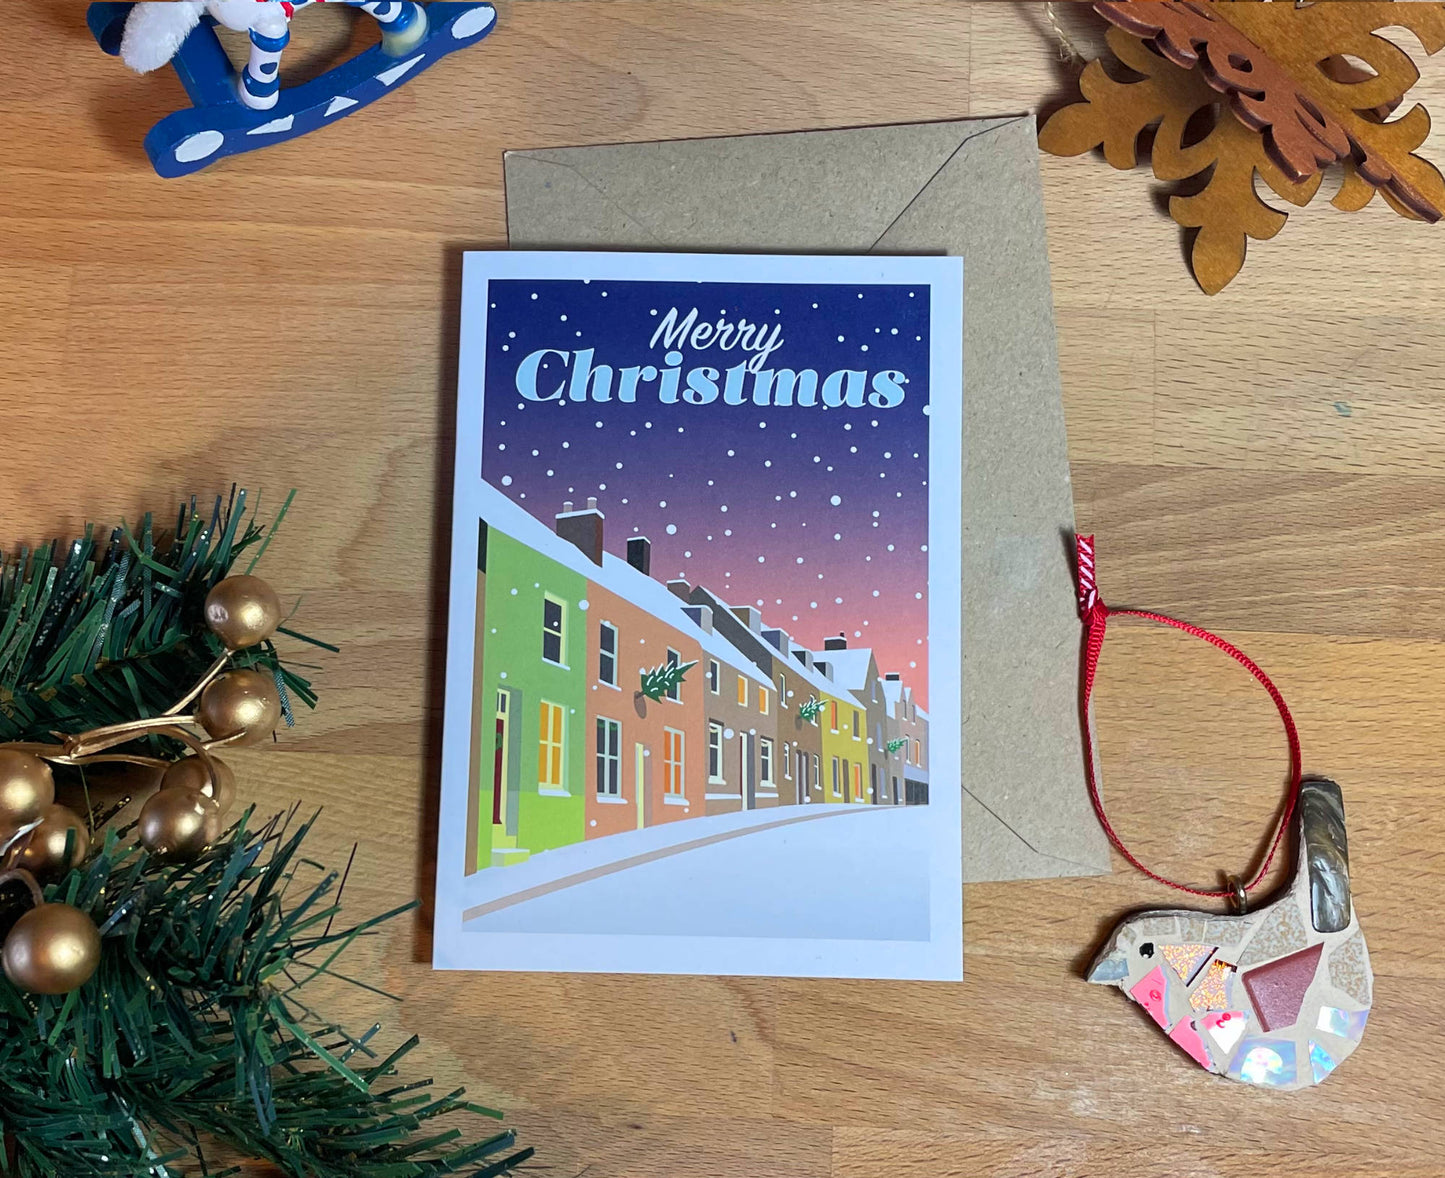 Malmesbury Street Christmas Card with decorations